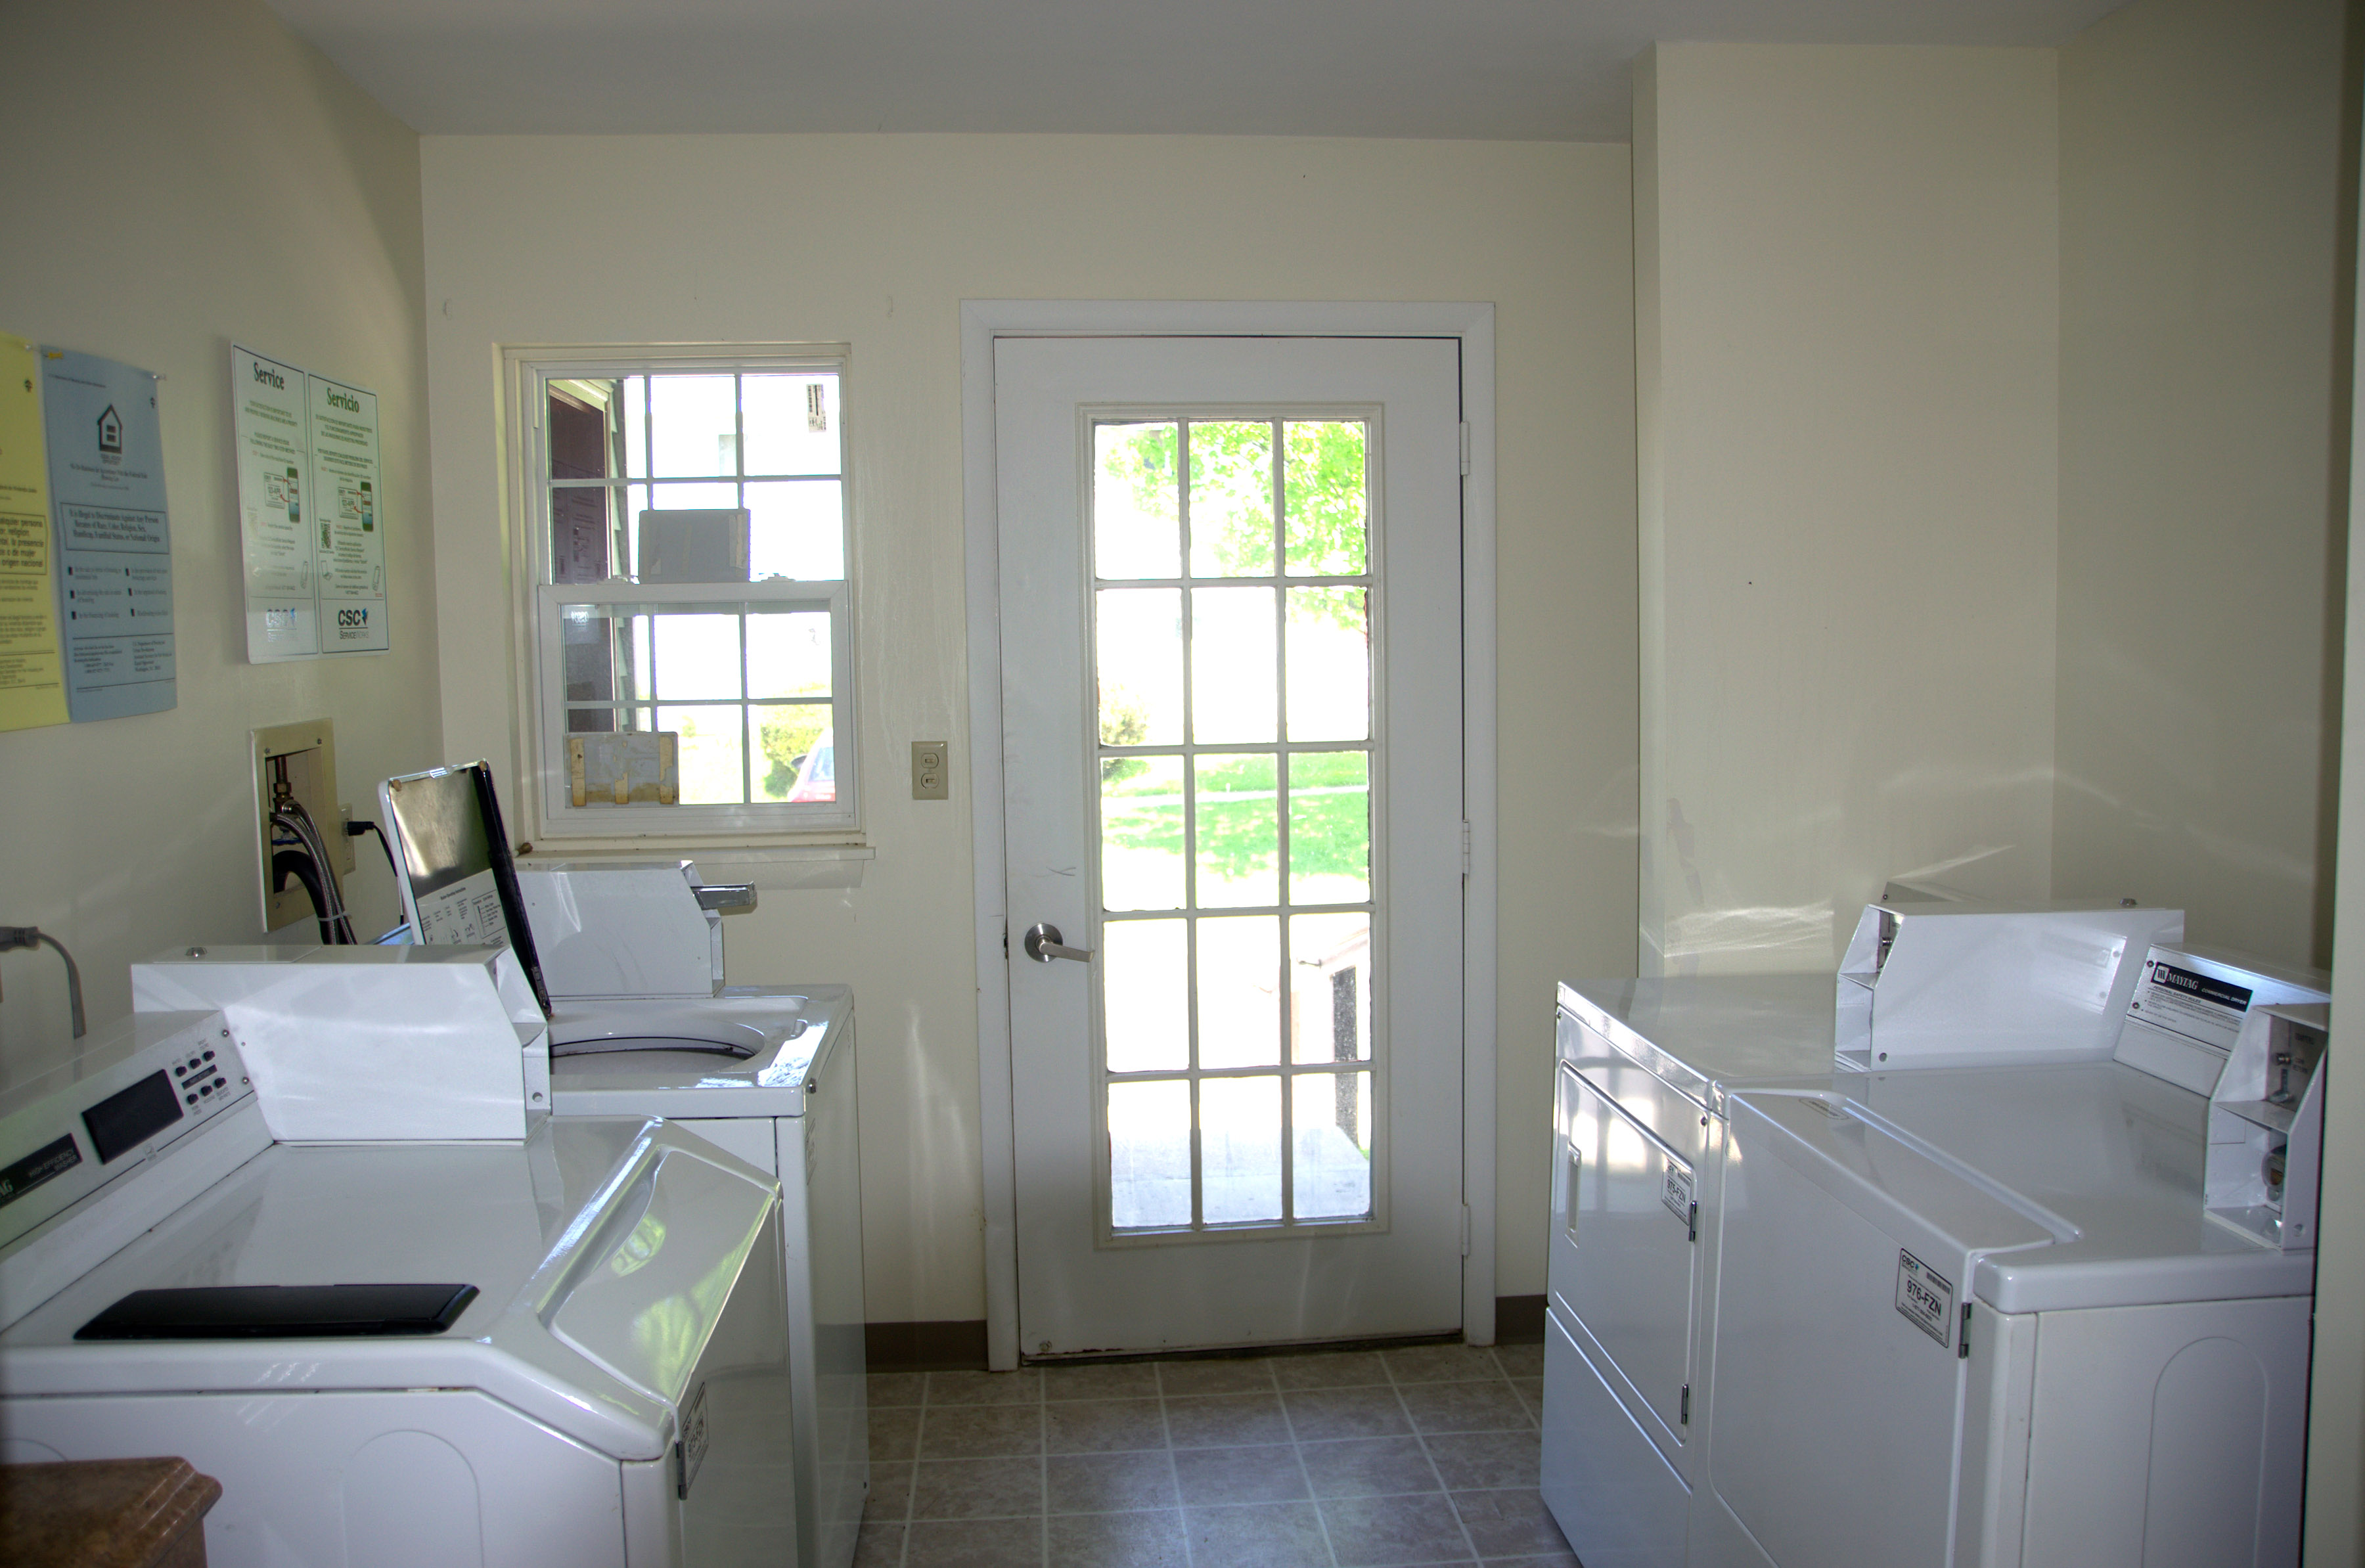 property management company syracuse ny image of community laundry room at community manor II